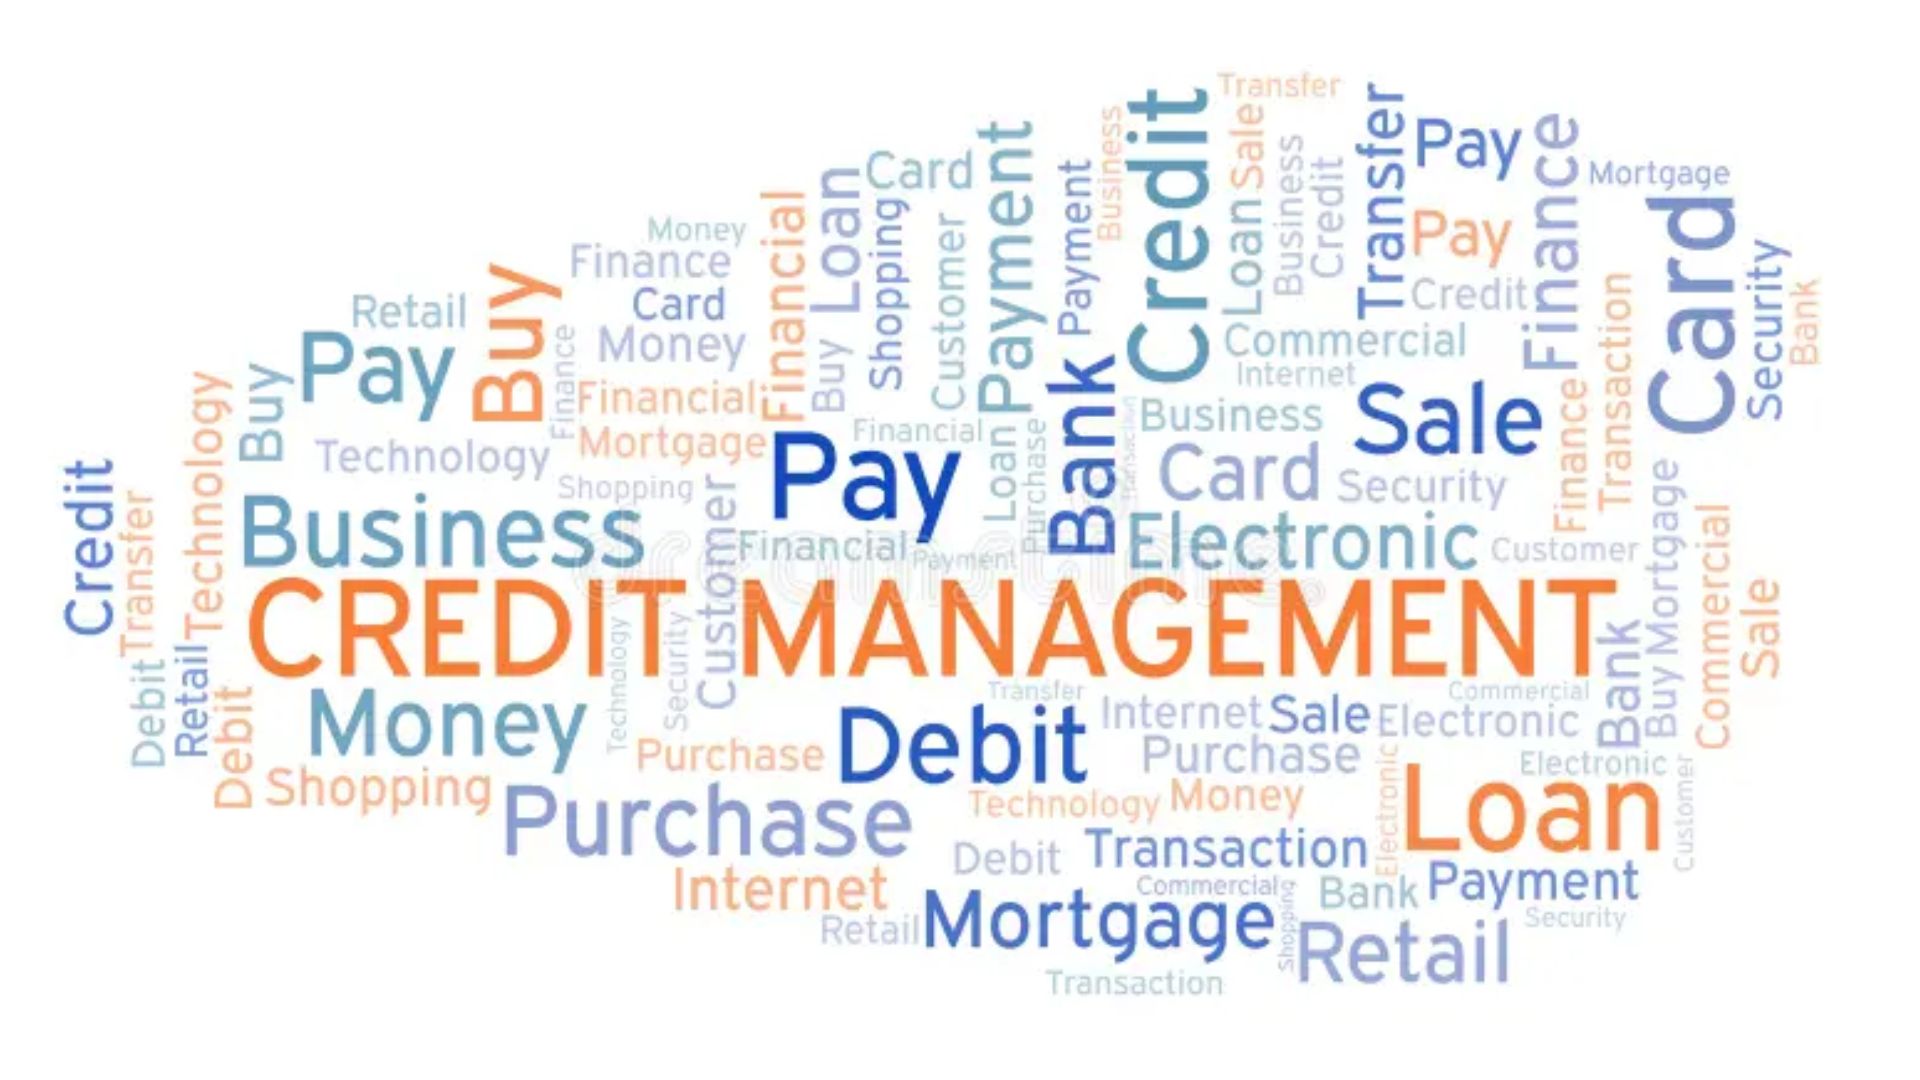 External Resources for Credit Management